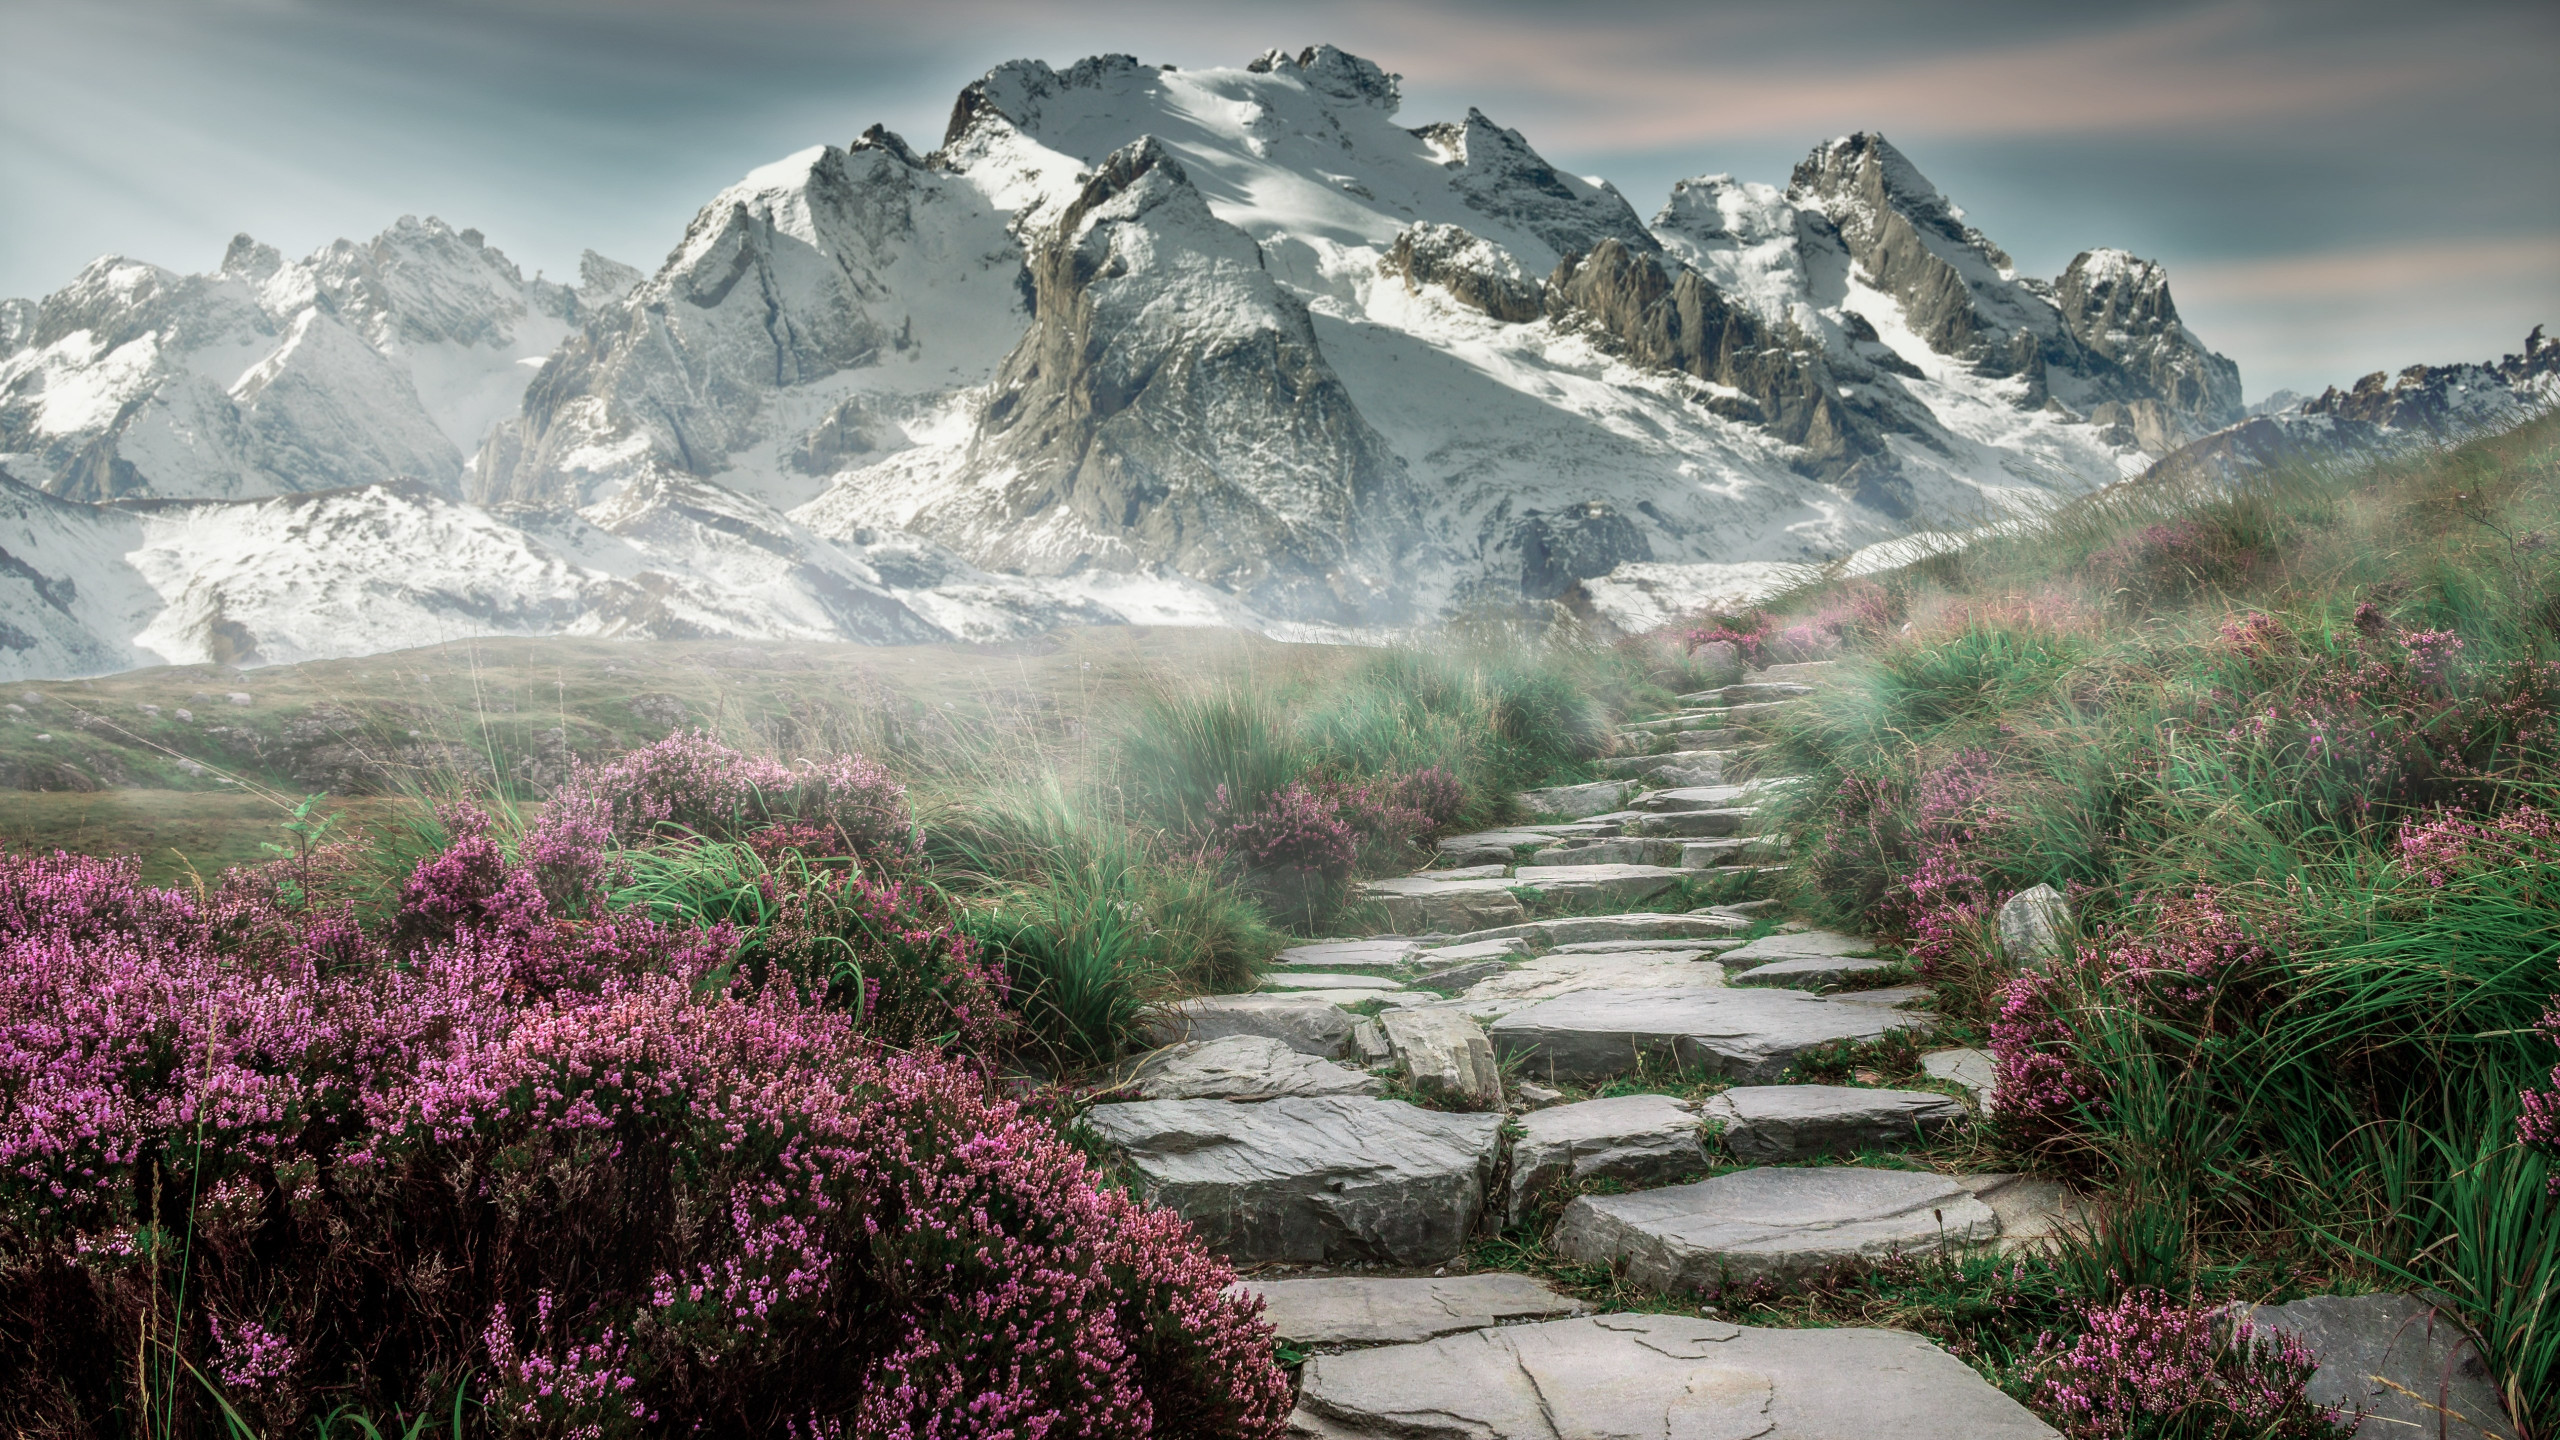 Surreal mountain landscape wallpaper 2560x1440